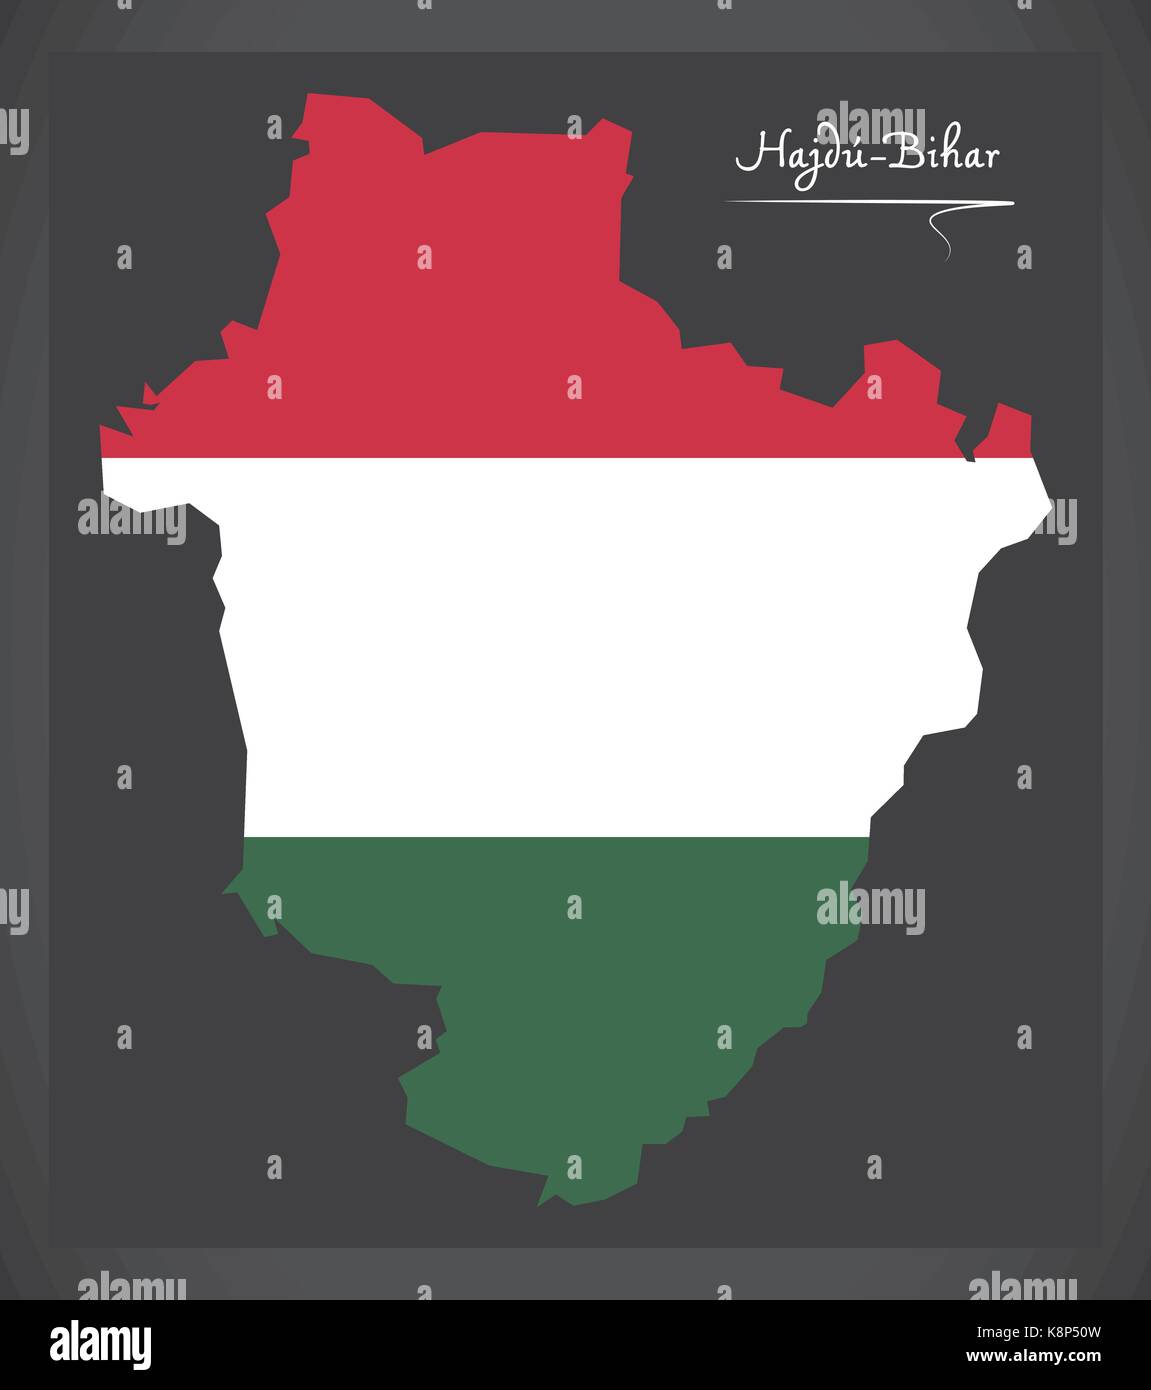 Hajdu-Bihar map of Hungary with Hungarian national flag illustration Stock Vector